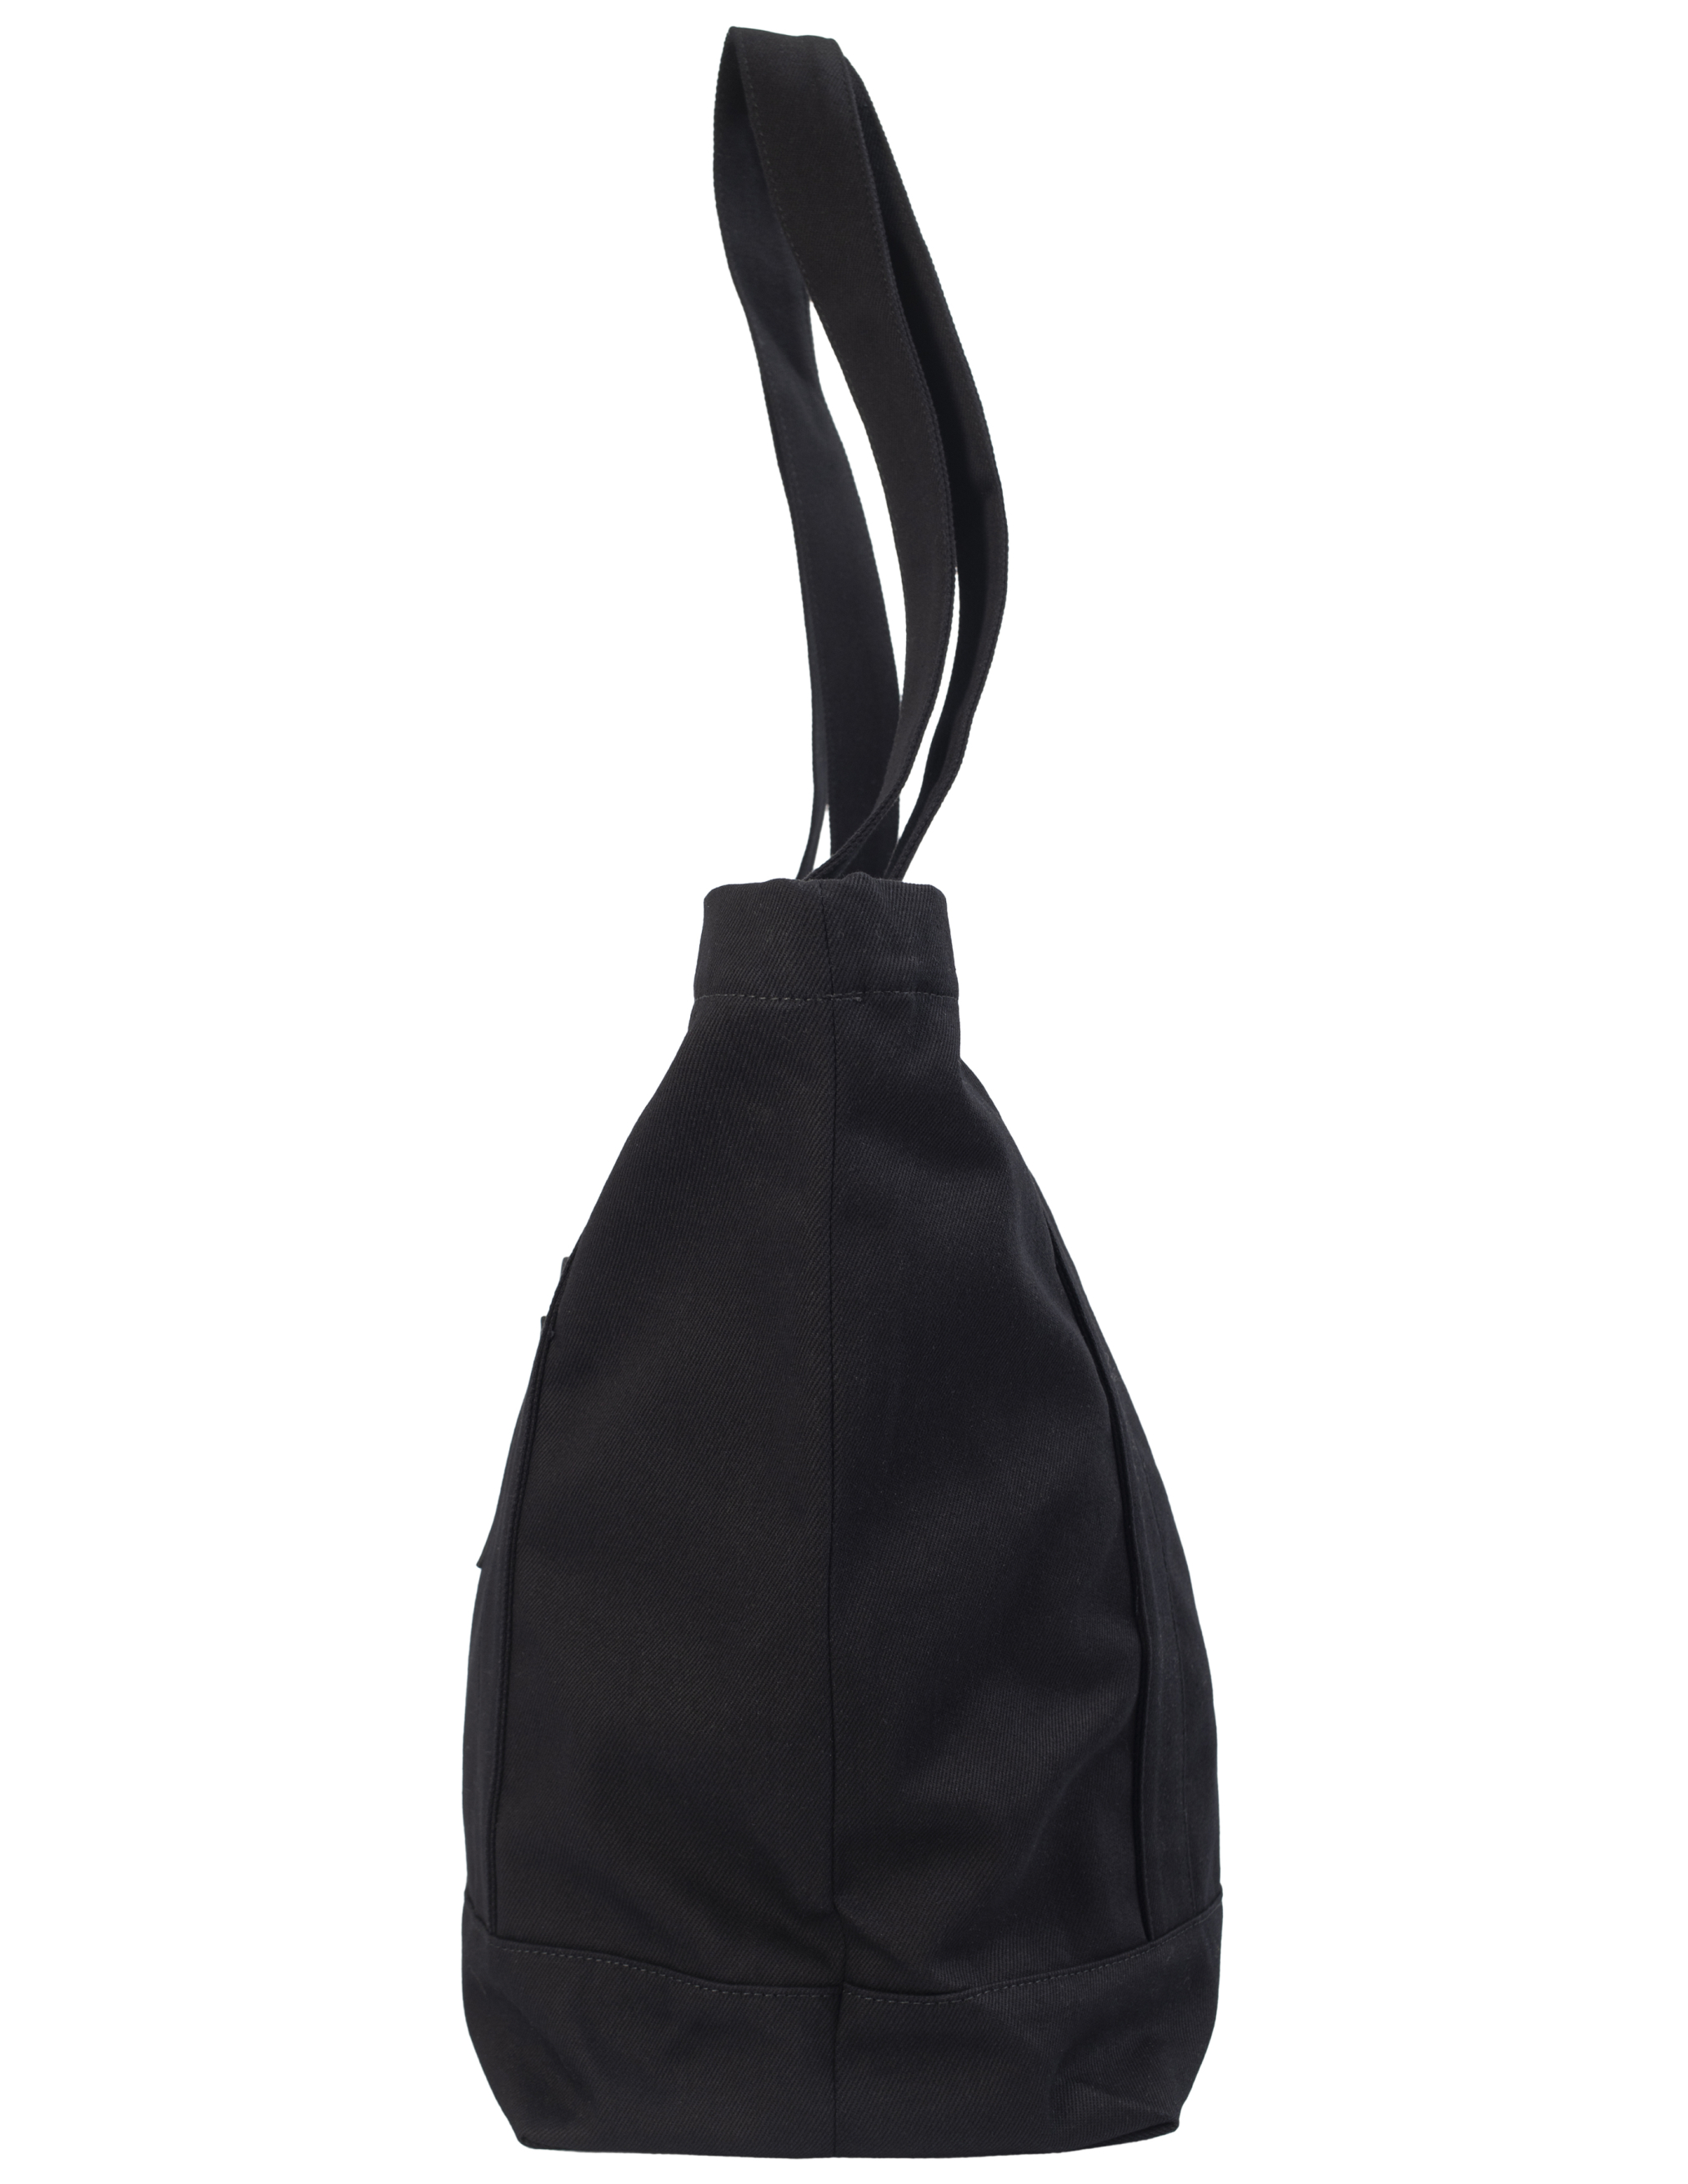 Джинсовая сумка-шоппер Raf Simons x Smiley с патчем Raf Simons 224-935-11000-0099, размер One Size - фото 2